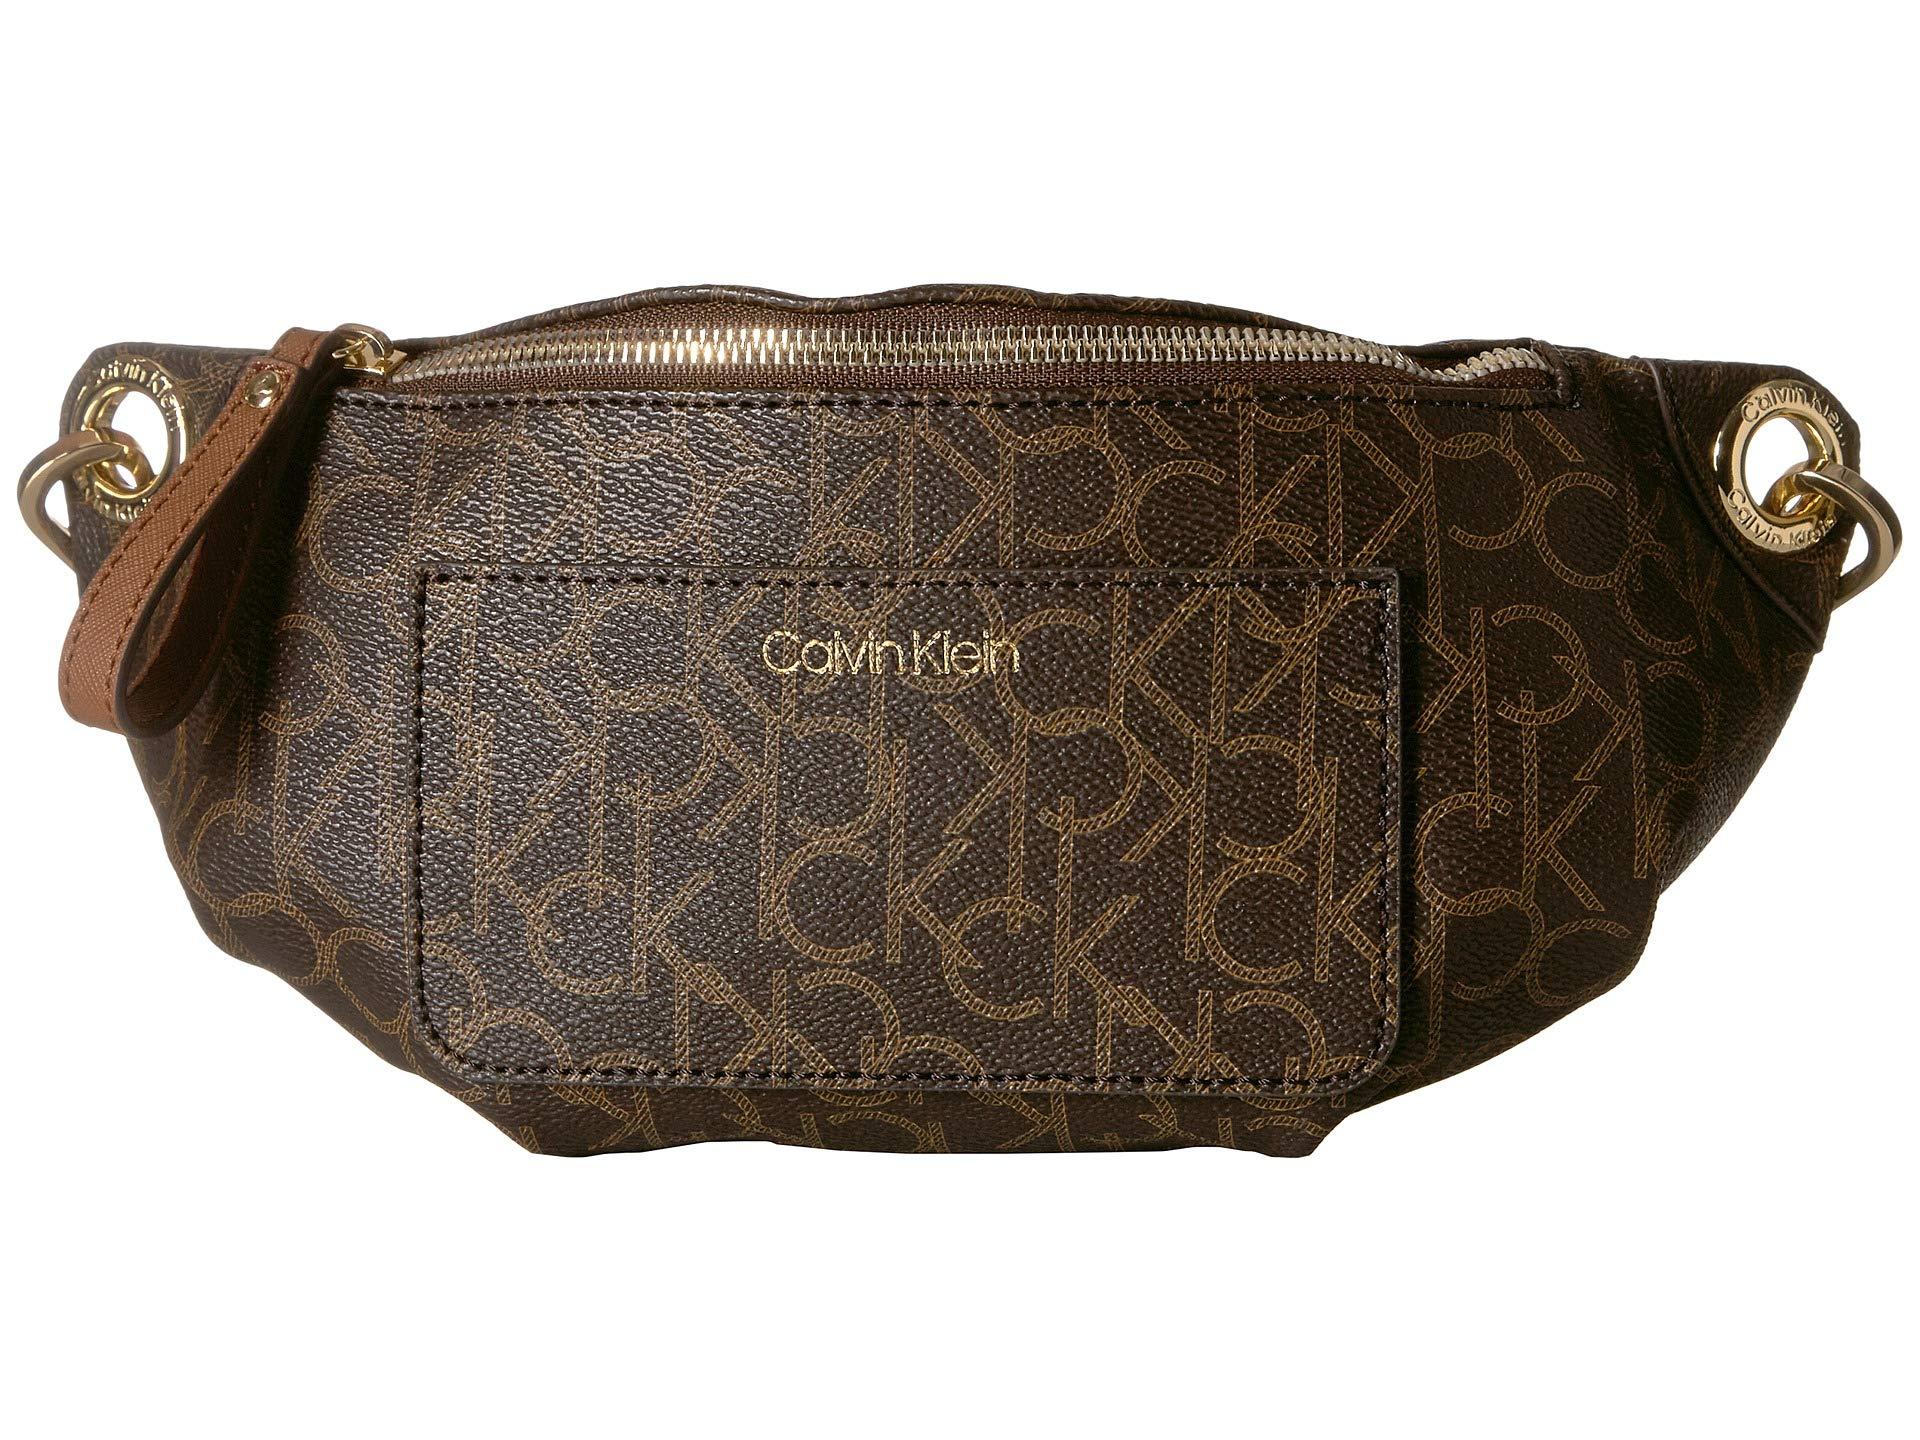 Lyst - Calvin Klein Sonoma Monogram Belt Bag (Brown/Khaki/Luggage ...